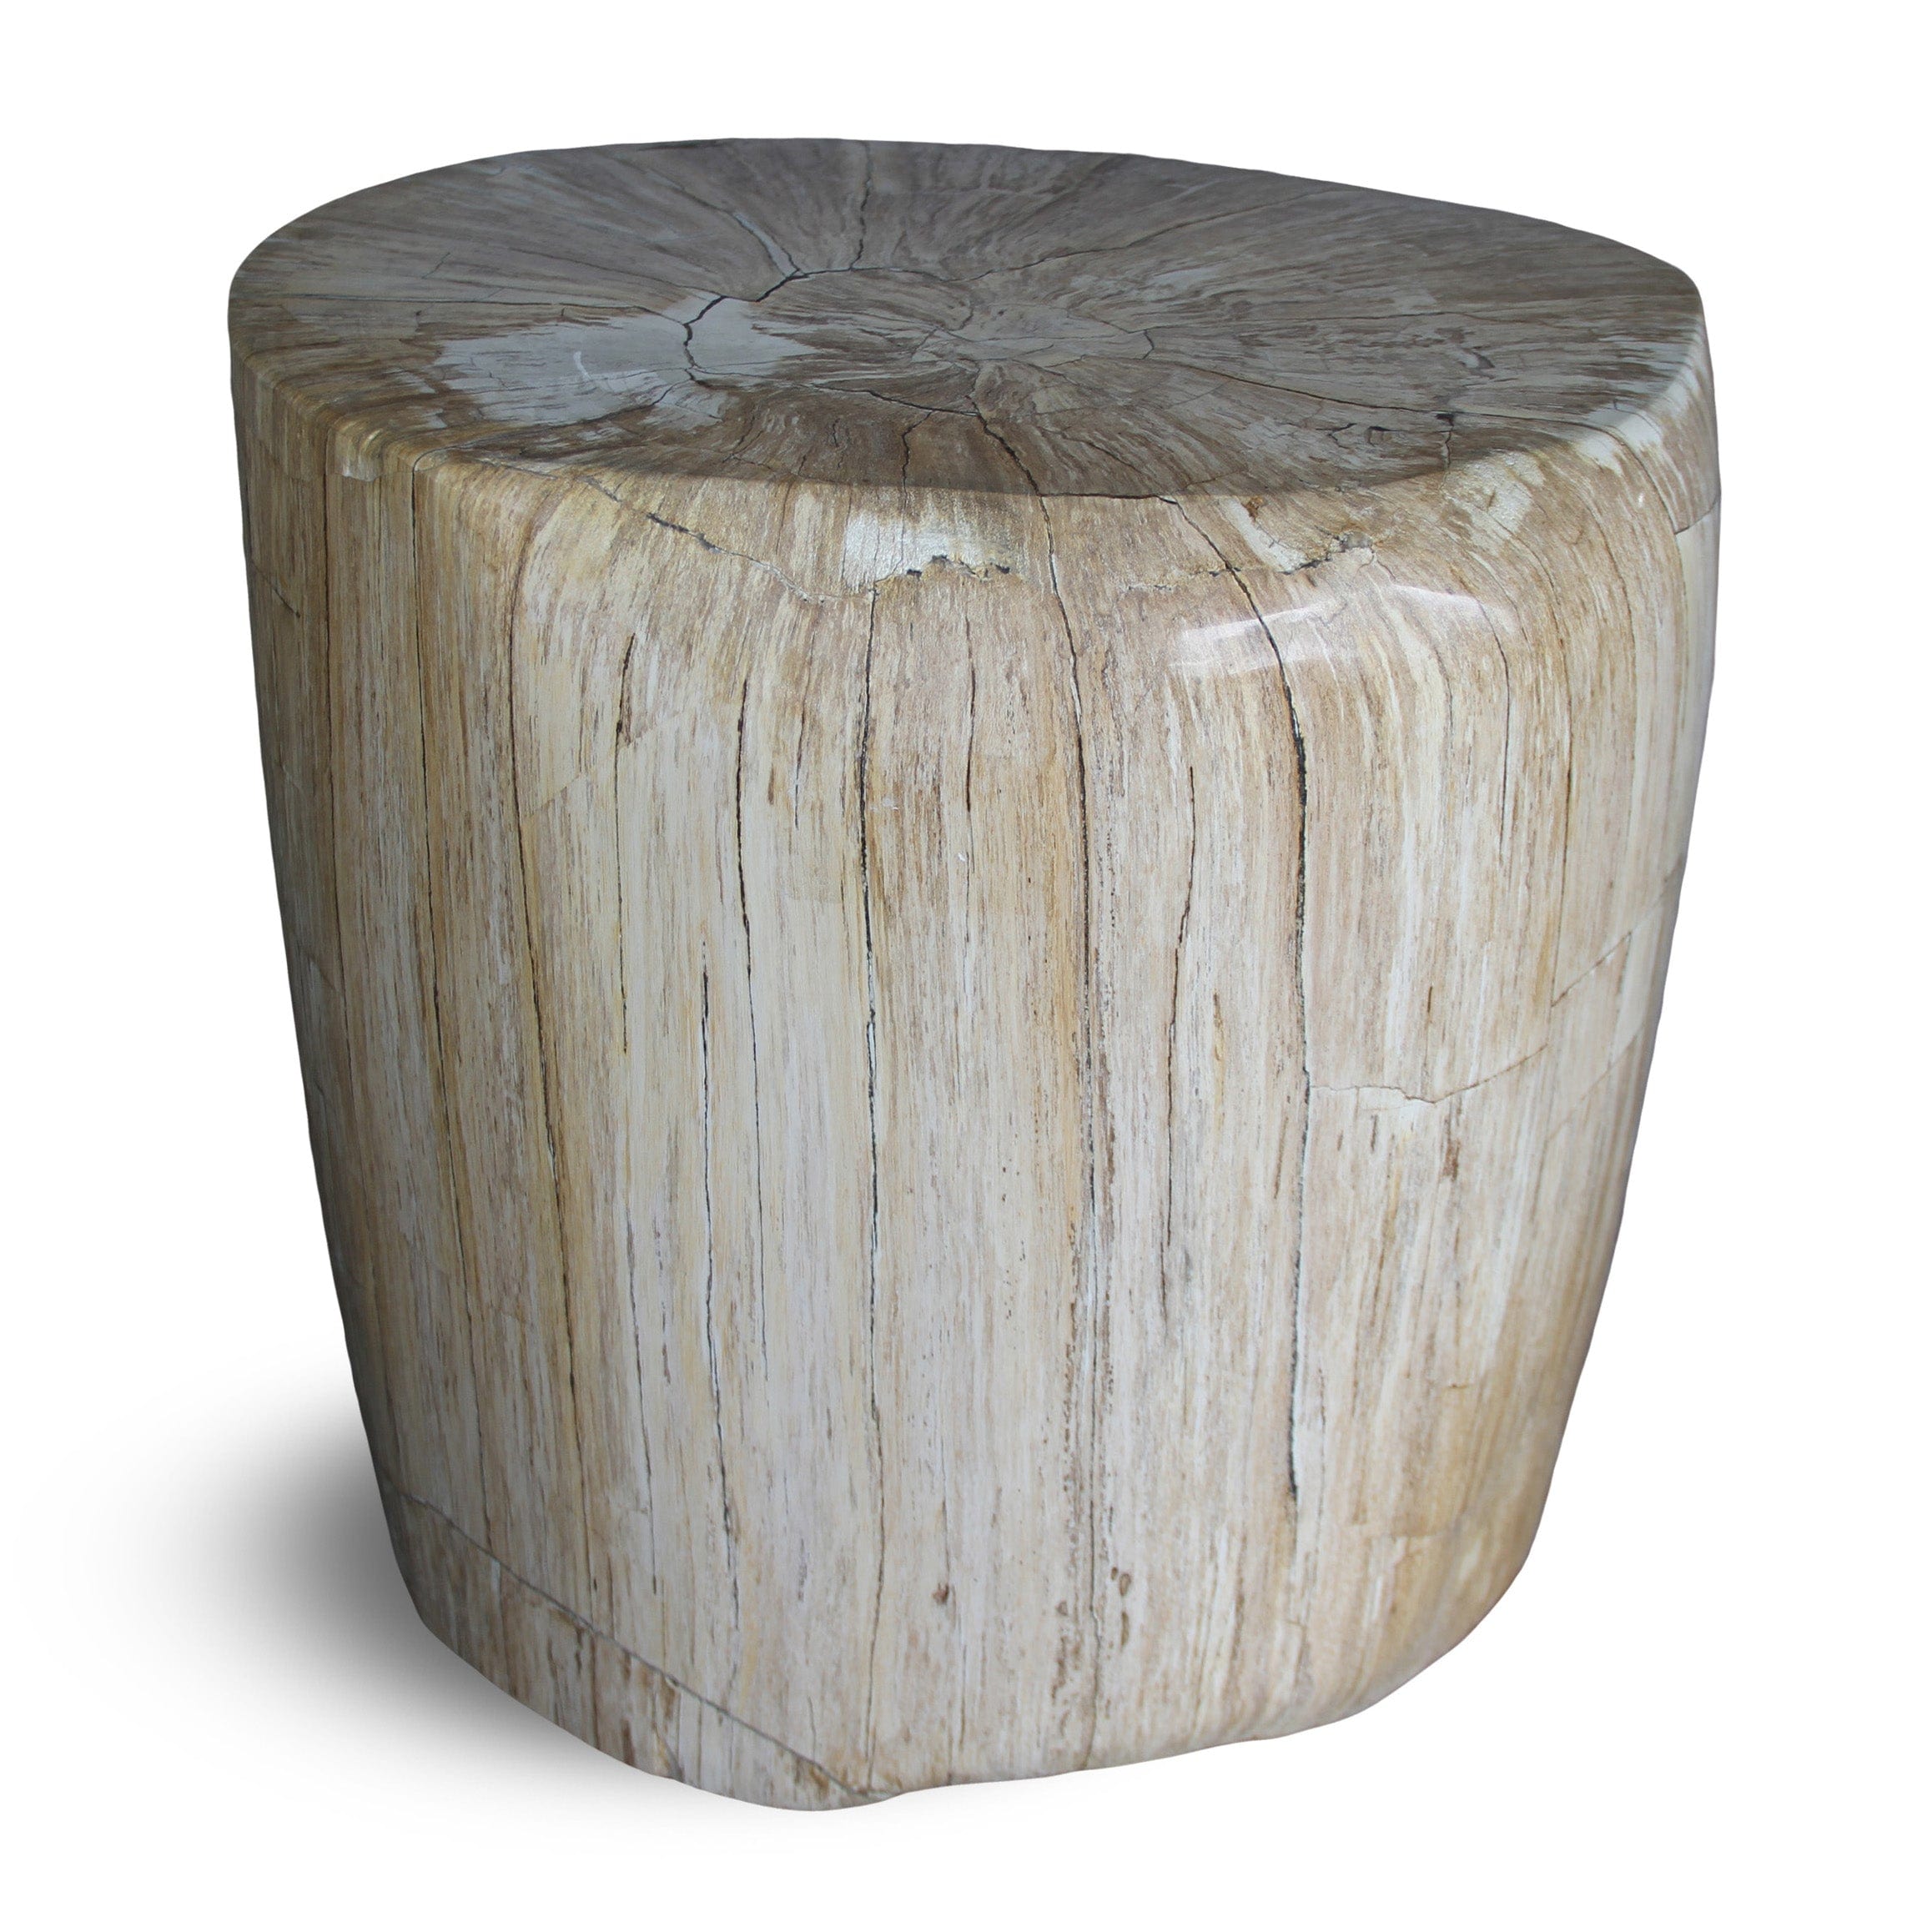 Kalifano Petrified Wood Petrified Wood Round Stump / Stool from Indonesia - 16" / 165 lbs PWS3000.007